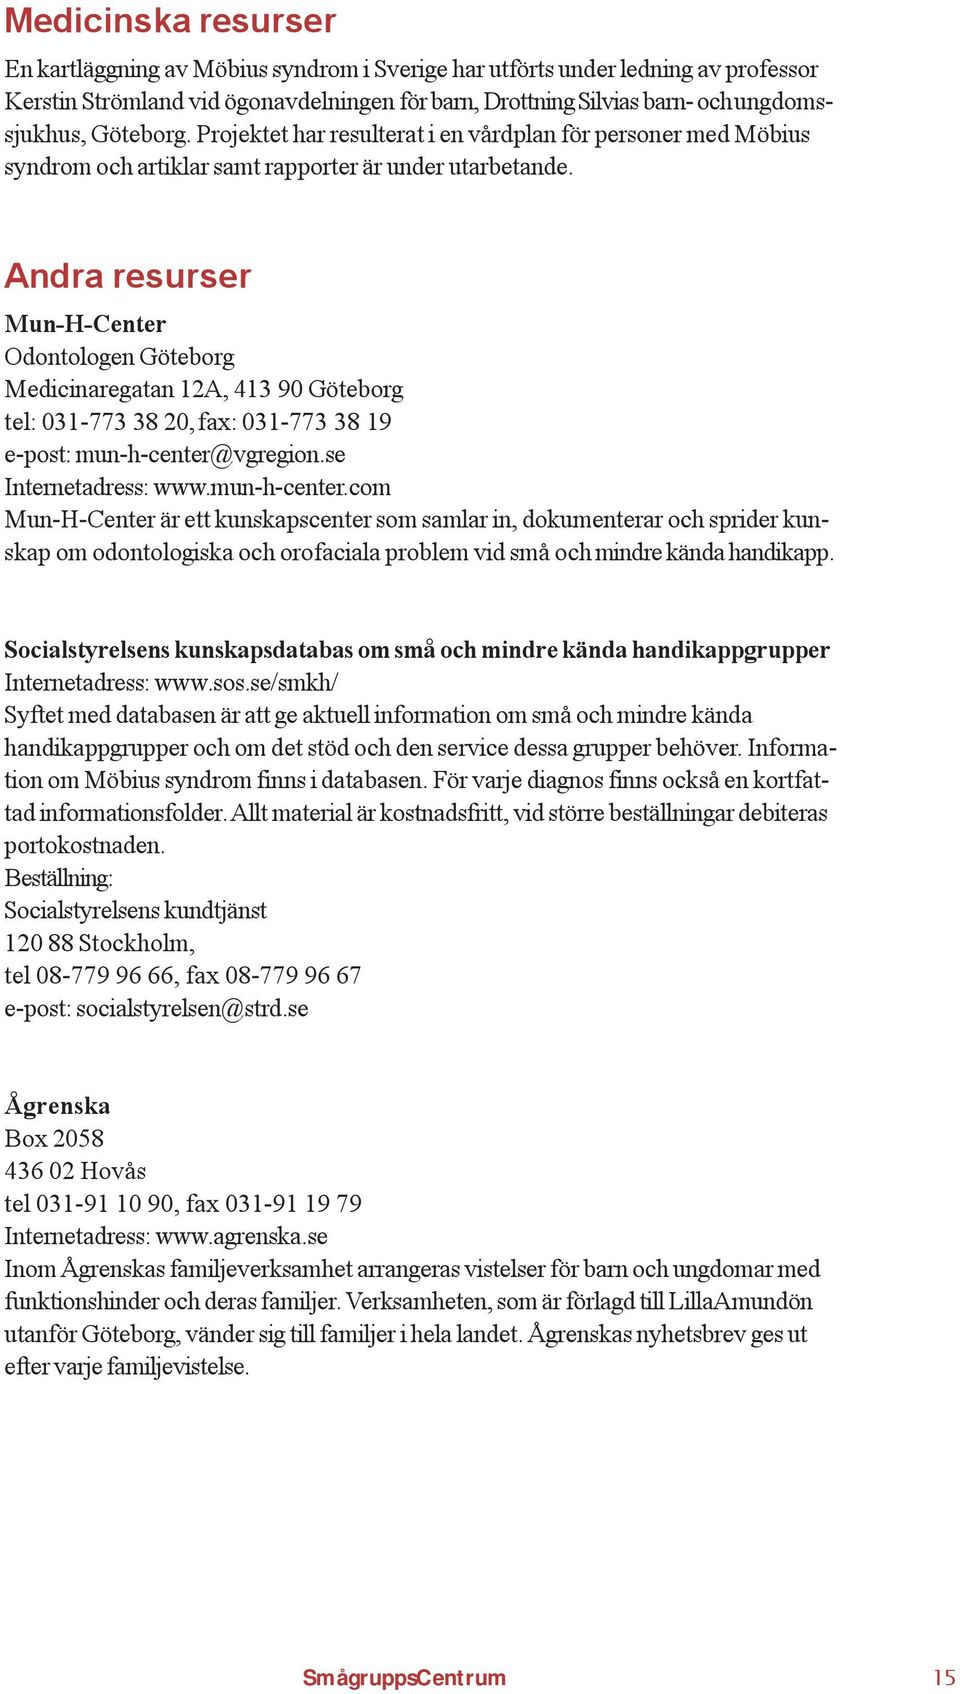 Andra resurser Mun-H-Center Odontologen Göteborg Medicinaregatan 12A, 413 90 Göteborg tel: 031-773 38 20, fax: 031-773 38 19 e-post: mun-h-center@